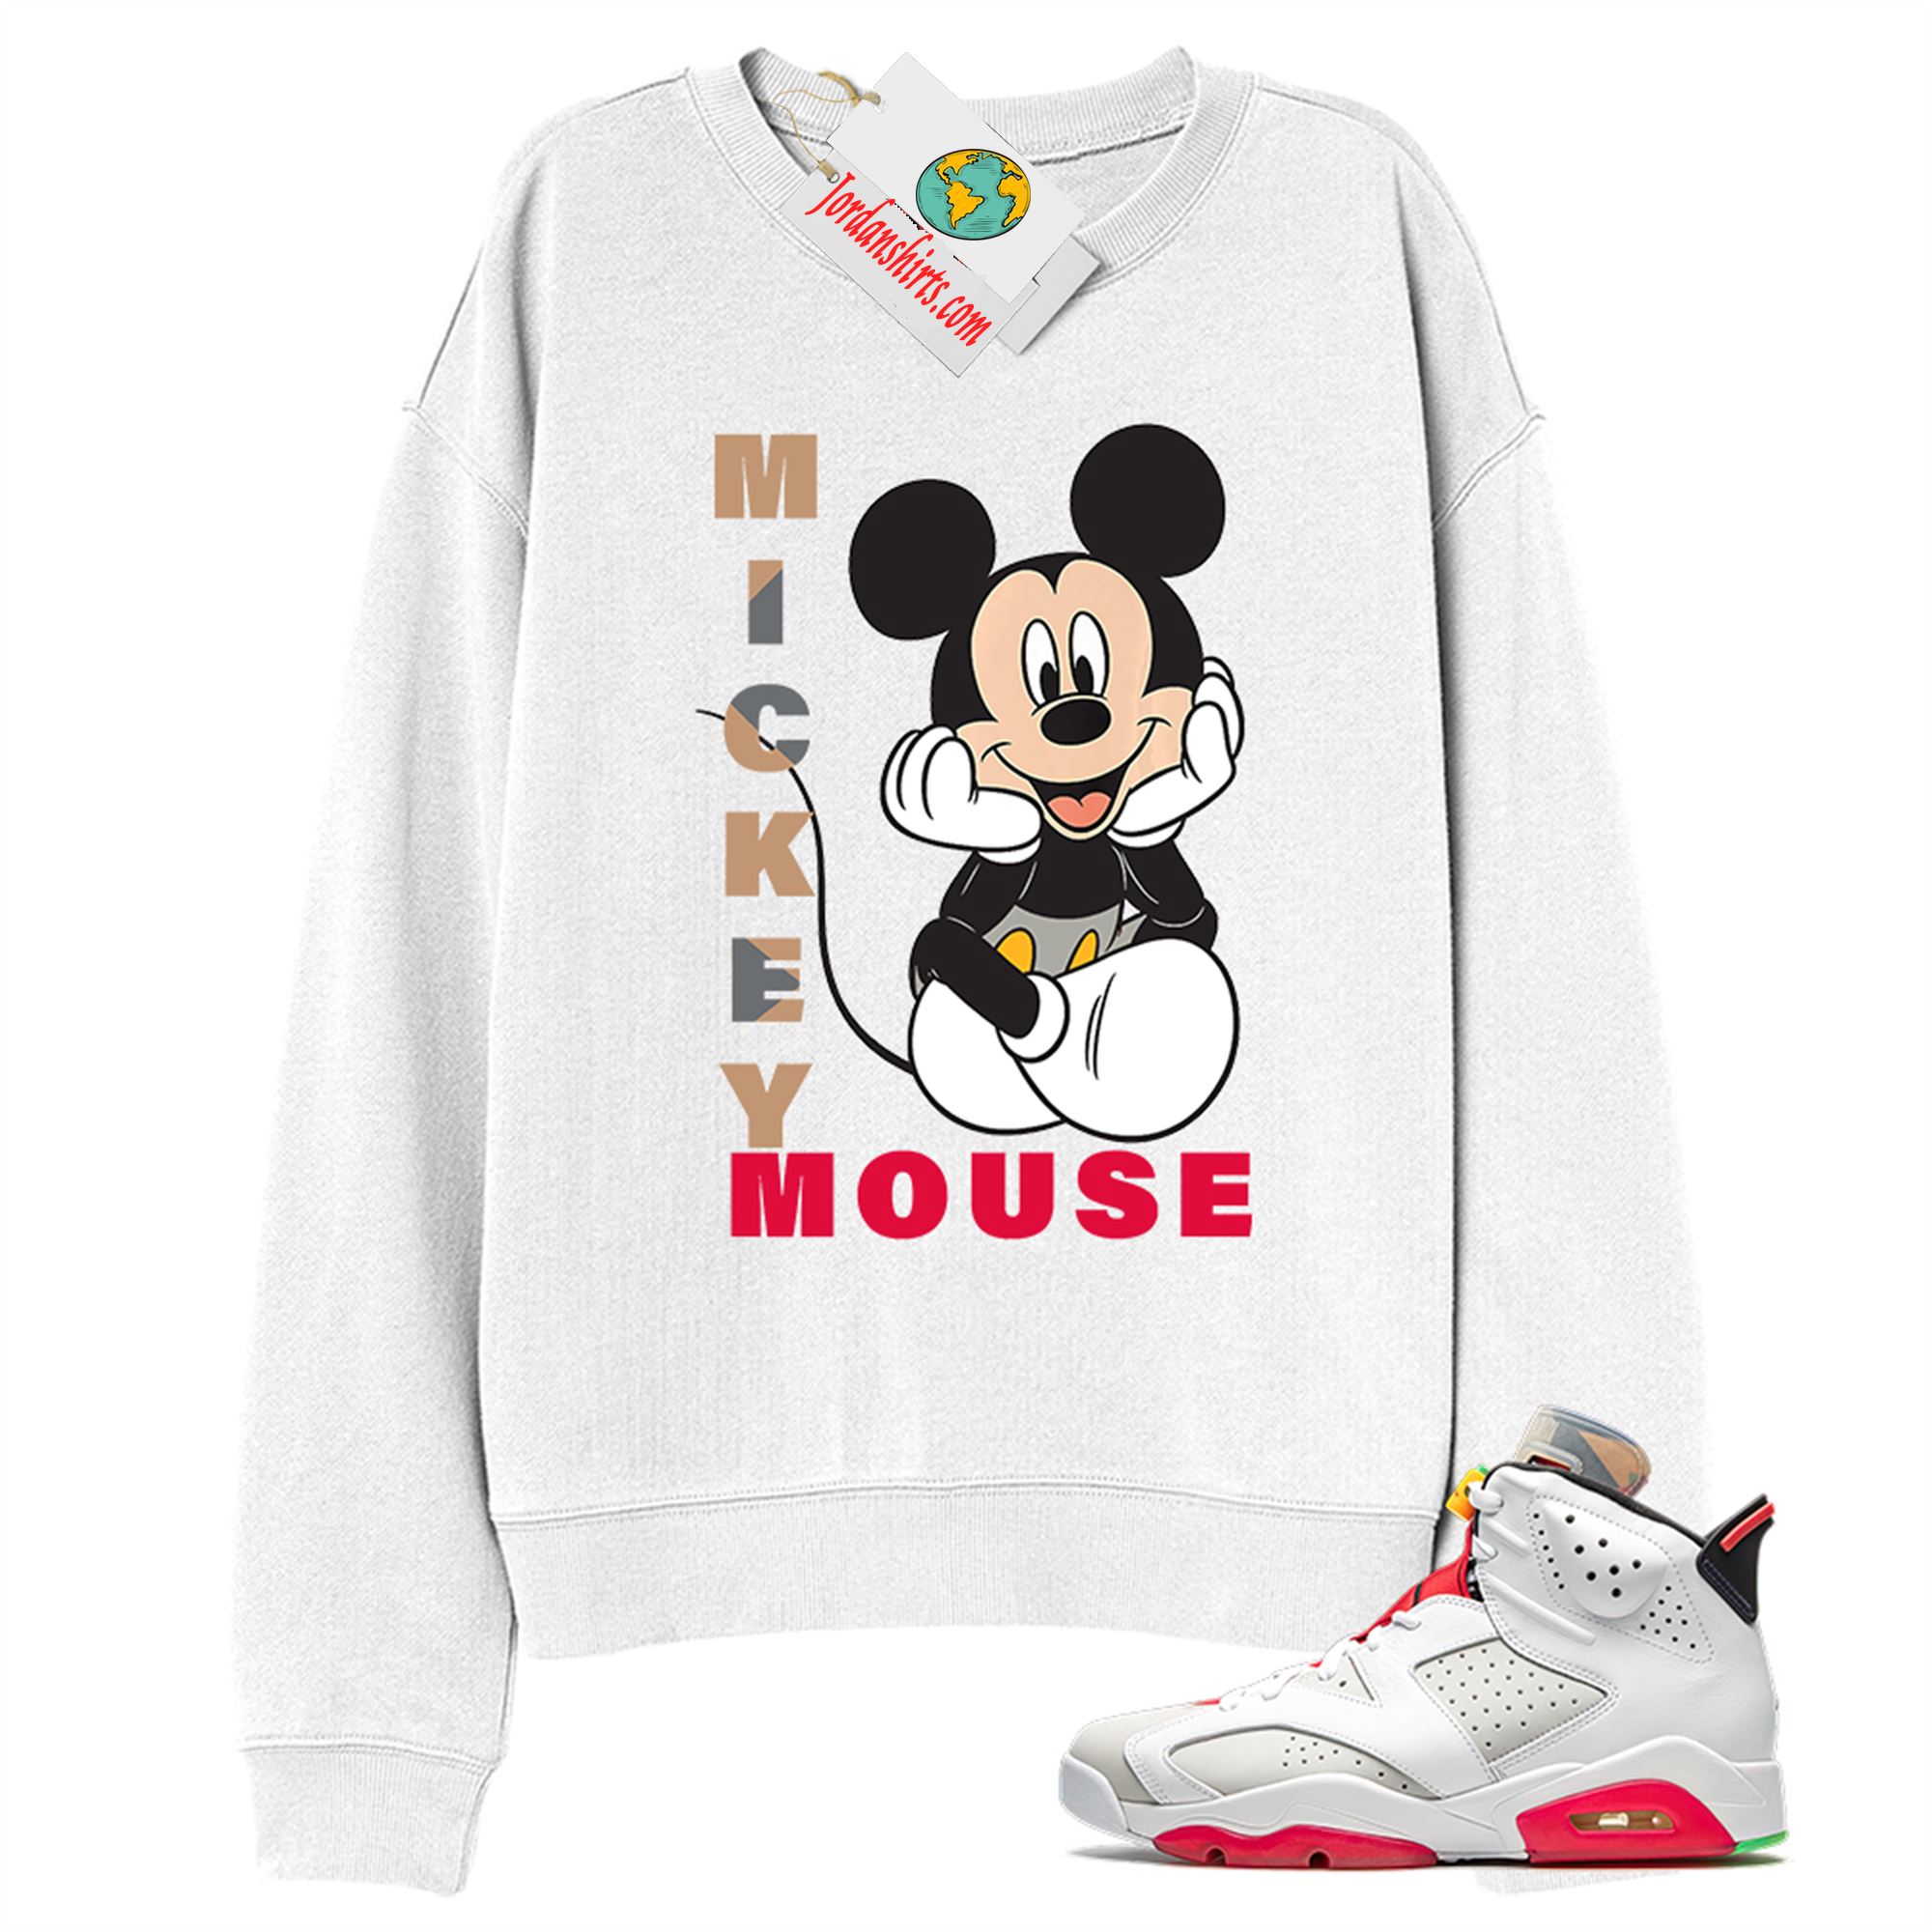 Jordan 6 Sweatshirt, Disney Mickey Mouse Hands In Face White Sweatshirt Air Jordan 6 Hare 6s Full Size Up To 5xl